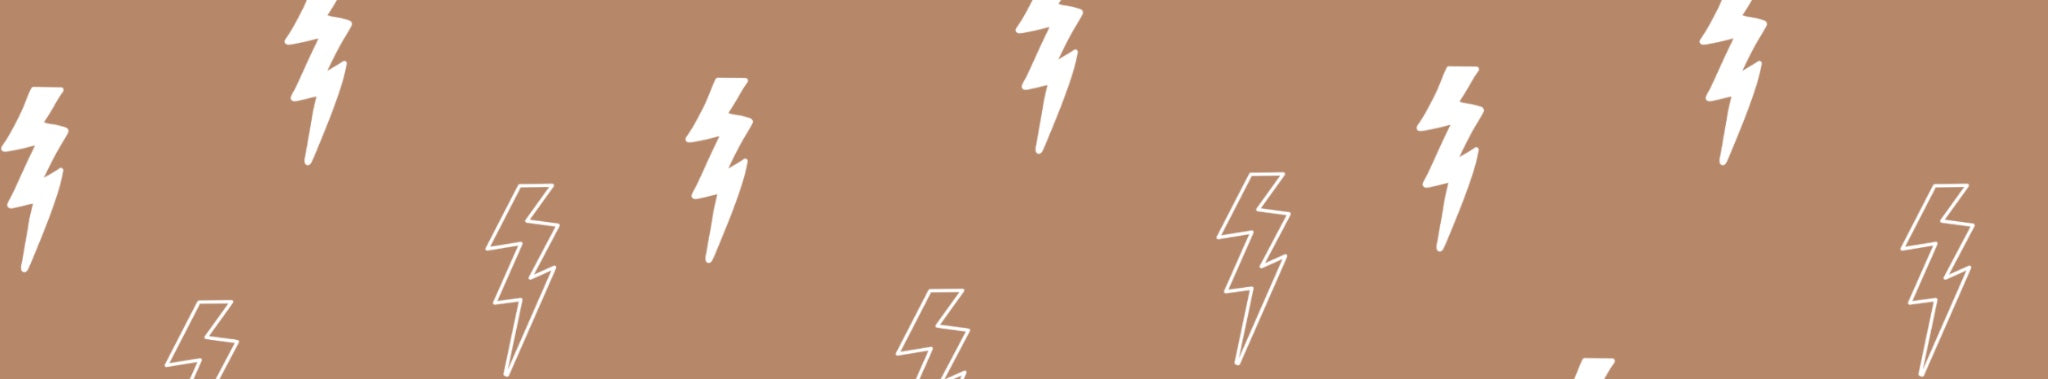 Lightning bolt picture